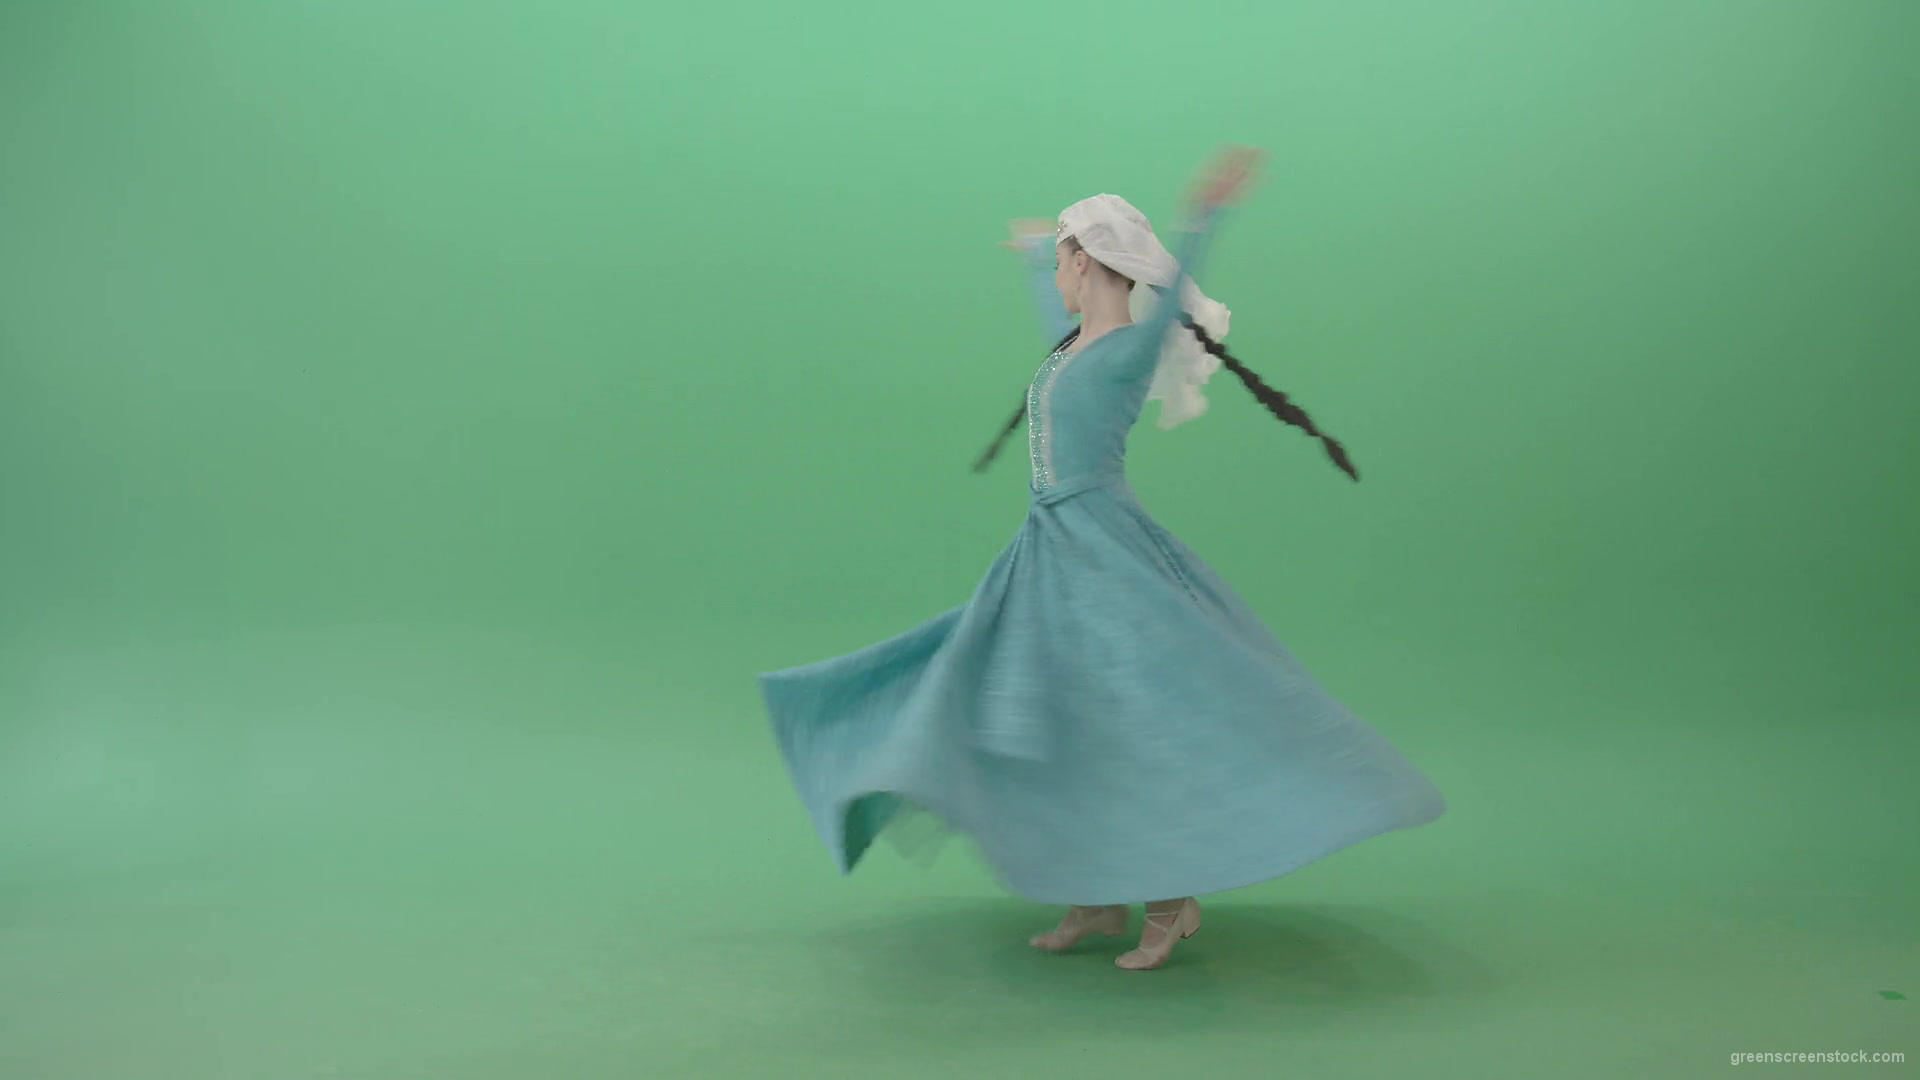 Iberian-Colchis-Woman-spinning-Georgian-Perkhuli-dance-in-blue-dress-isolated-on-Green-Screen-4K-Video-Footage-1920_006 Green Screen Stock